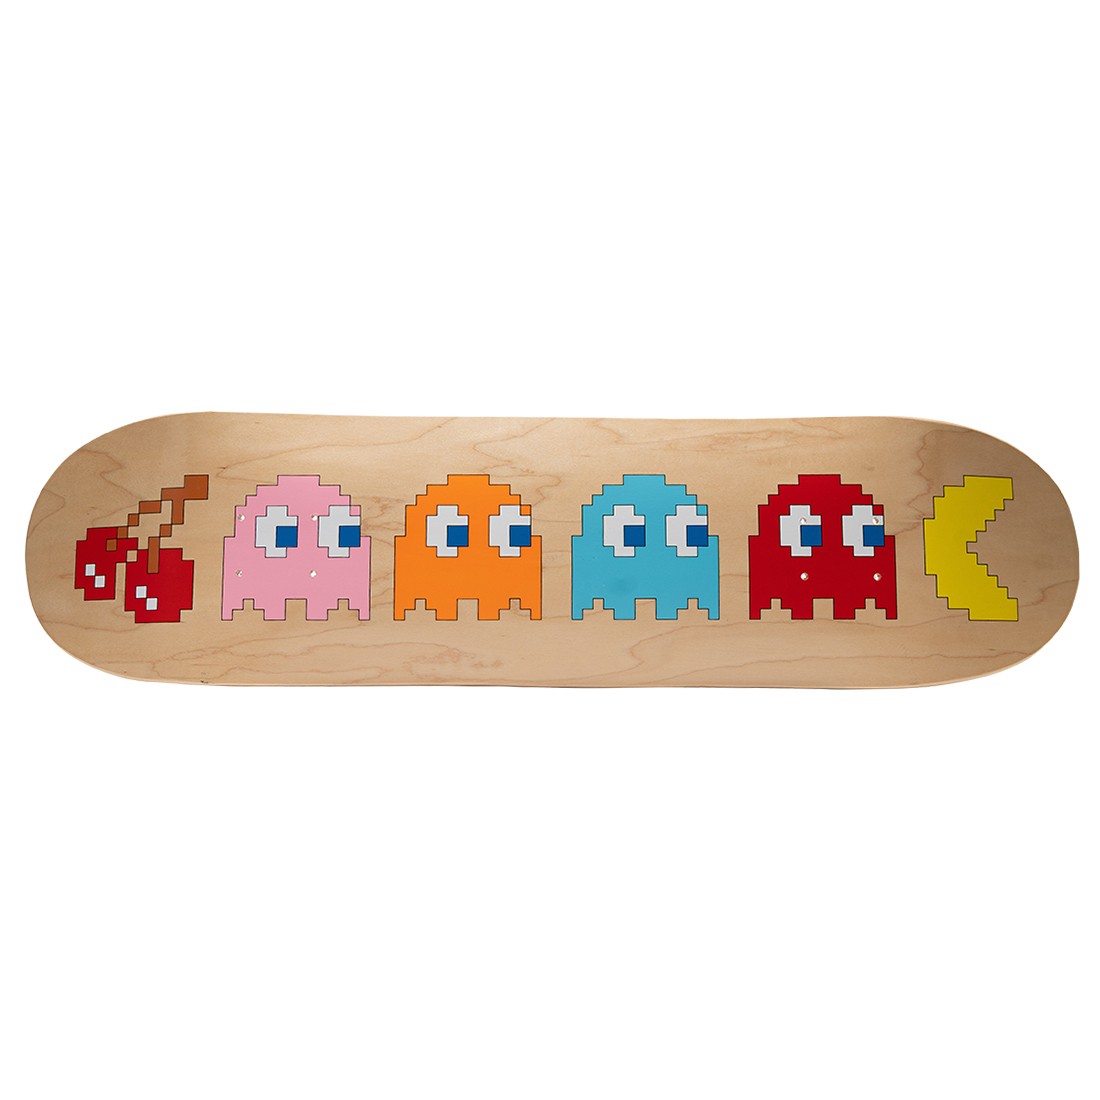 Medicom Pac-Man Skateboard Deck (tan)